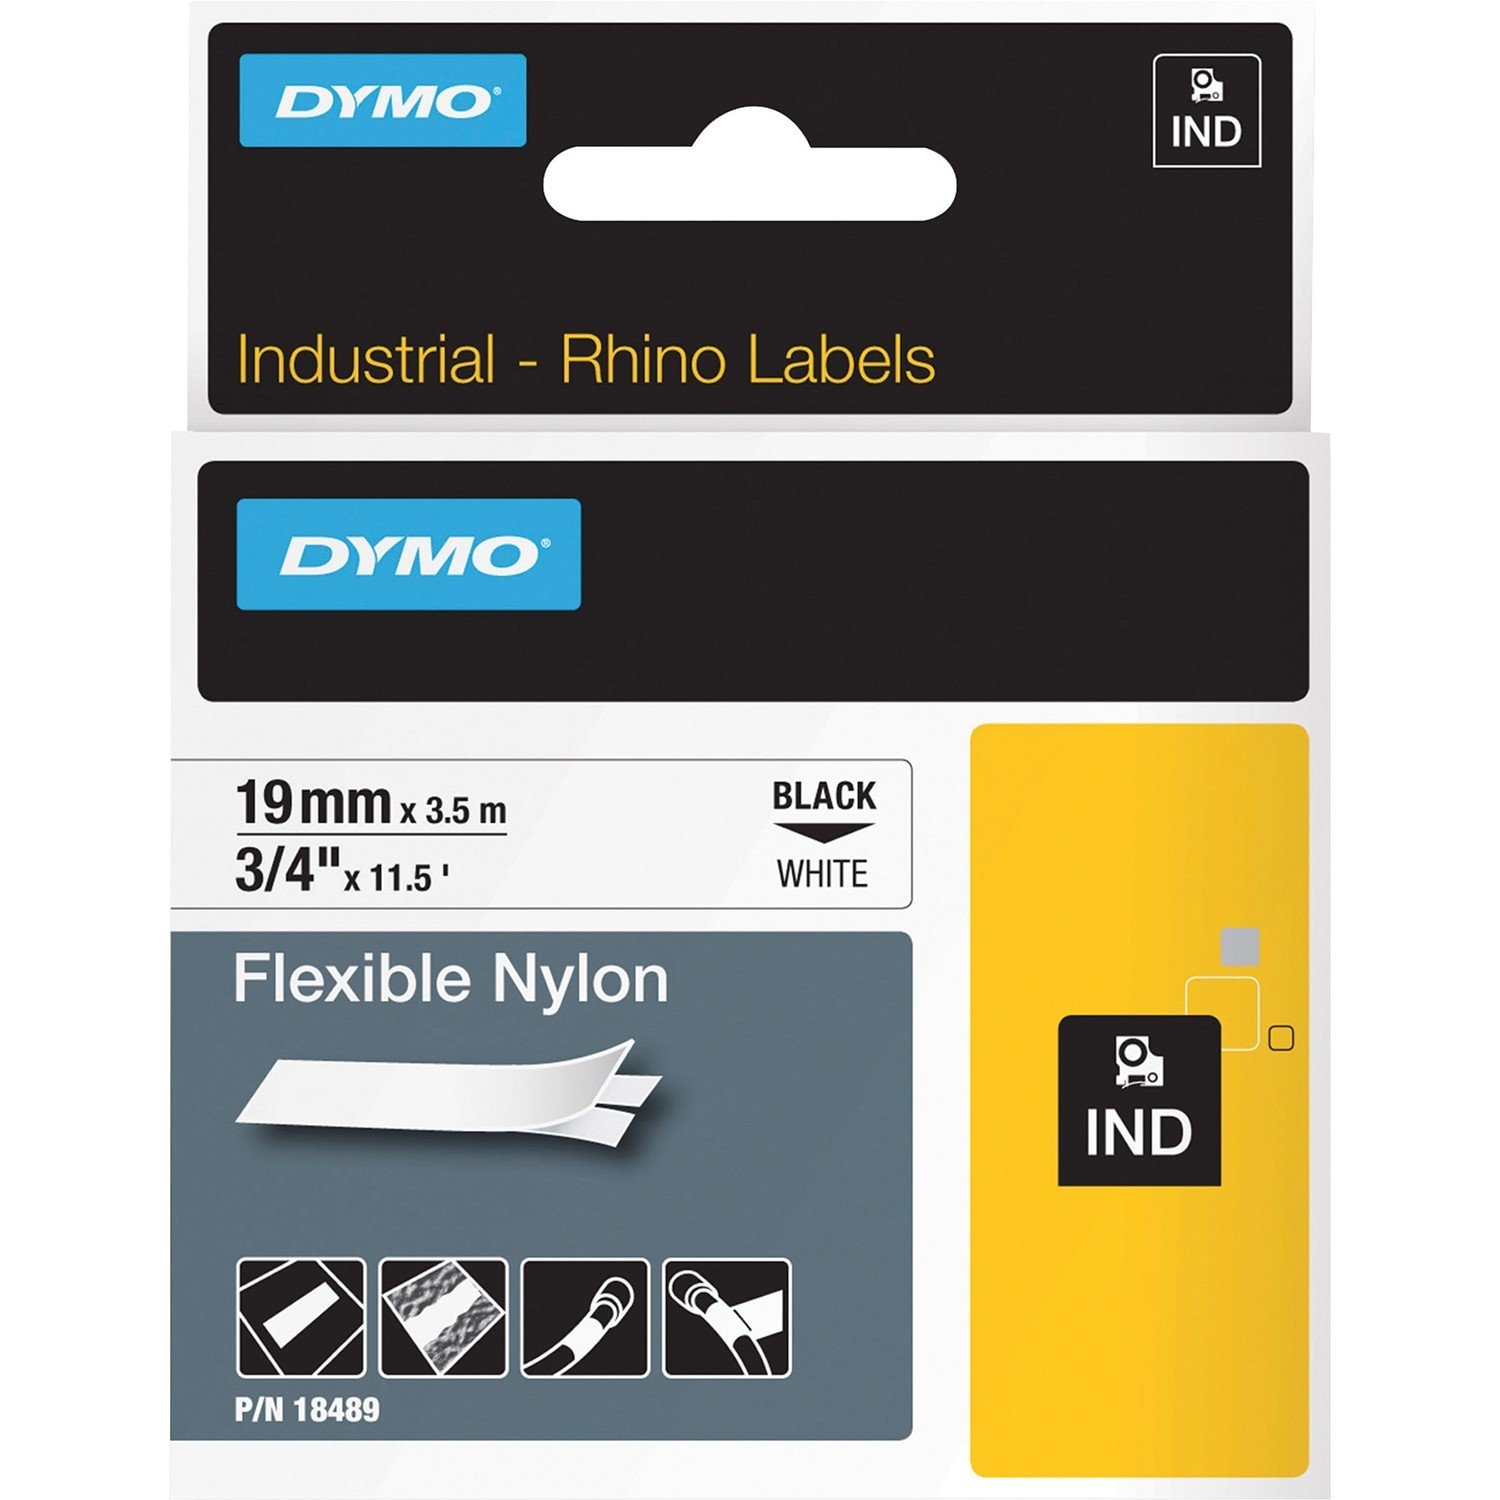 Dymo Rhino 3/4In X 11.5FT, White Flexible Nylon Labels